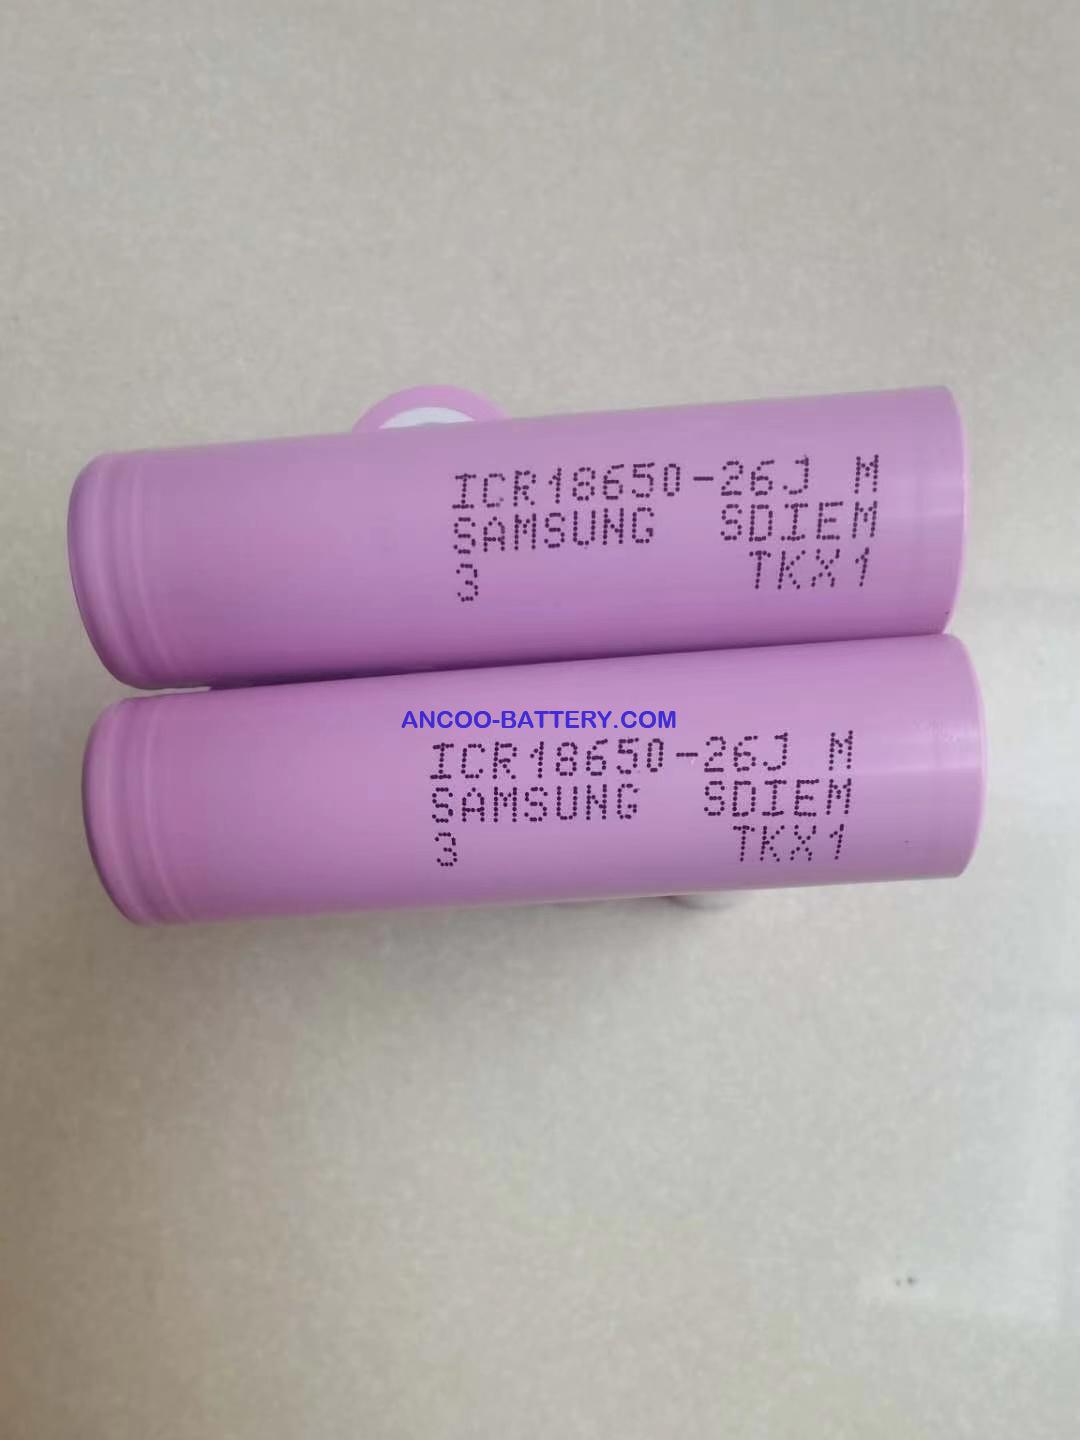 Samsung 26JM SDI 26J3 18650 2600mAh 10A Battery